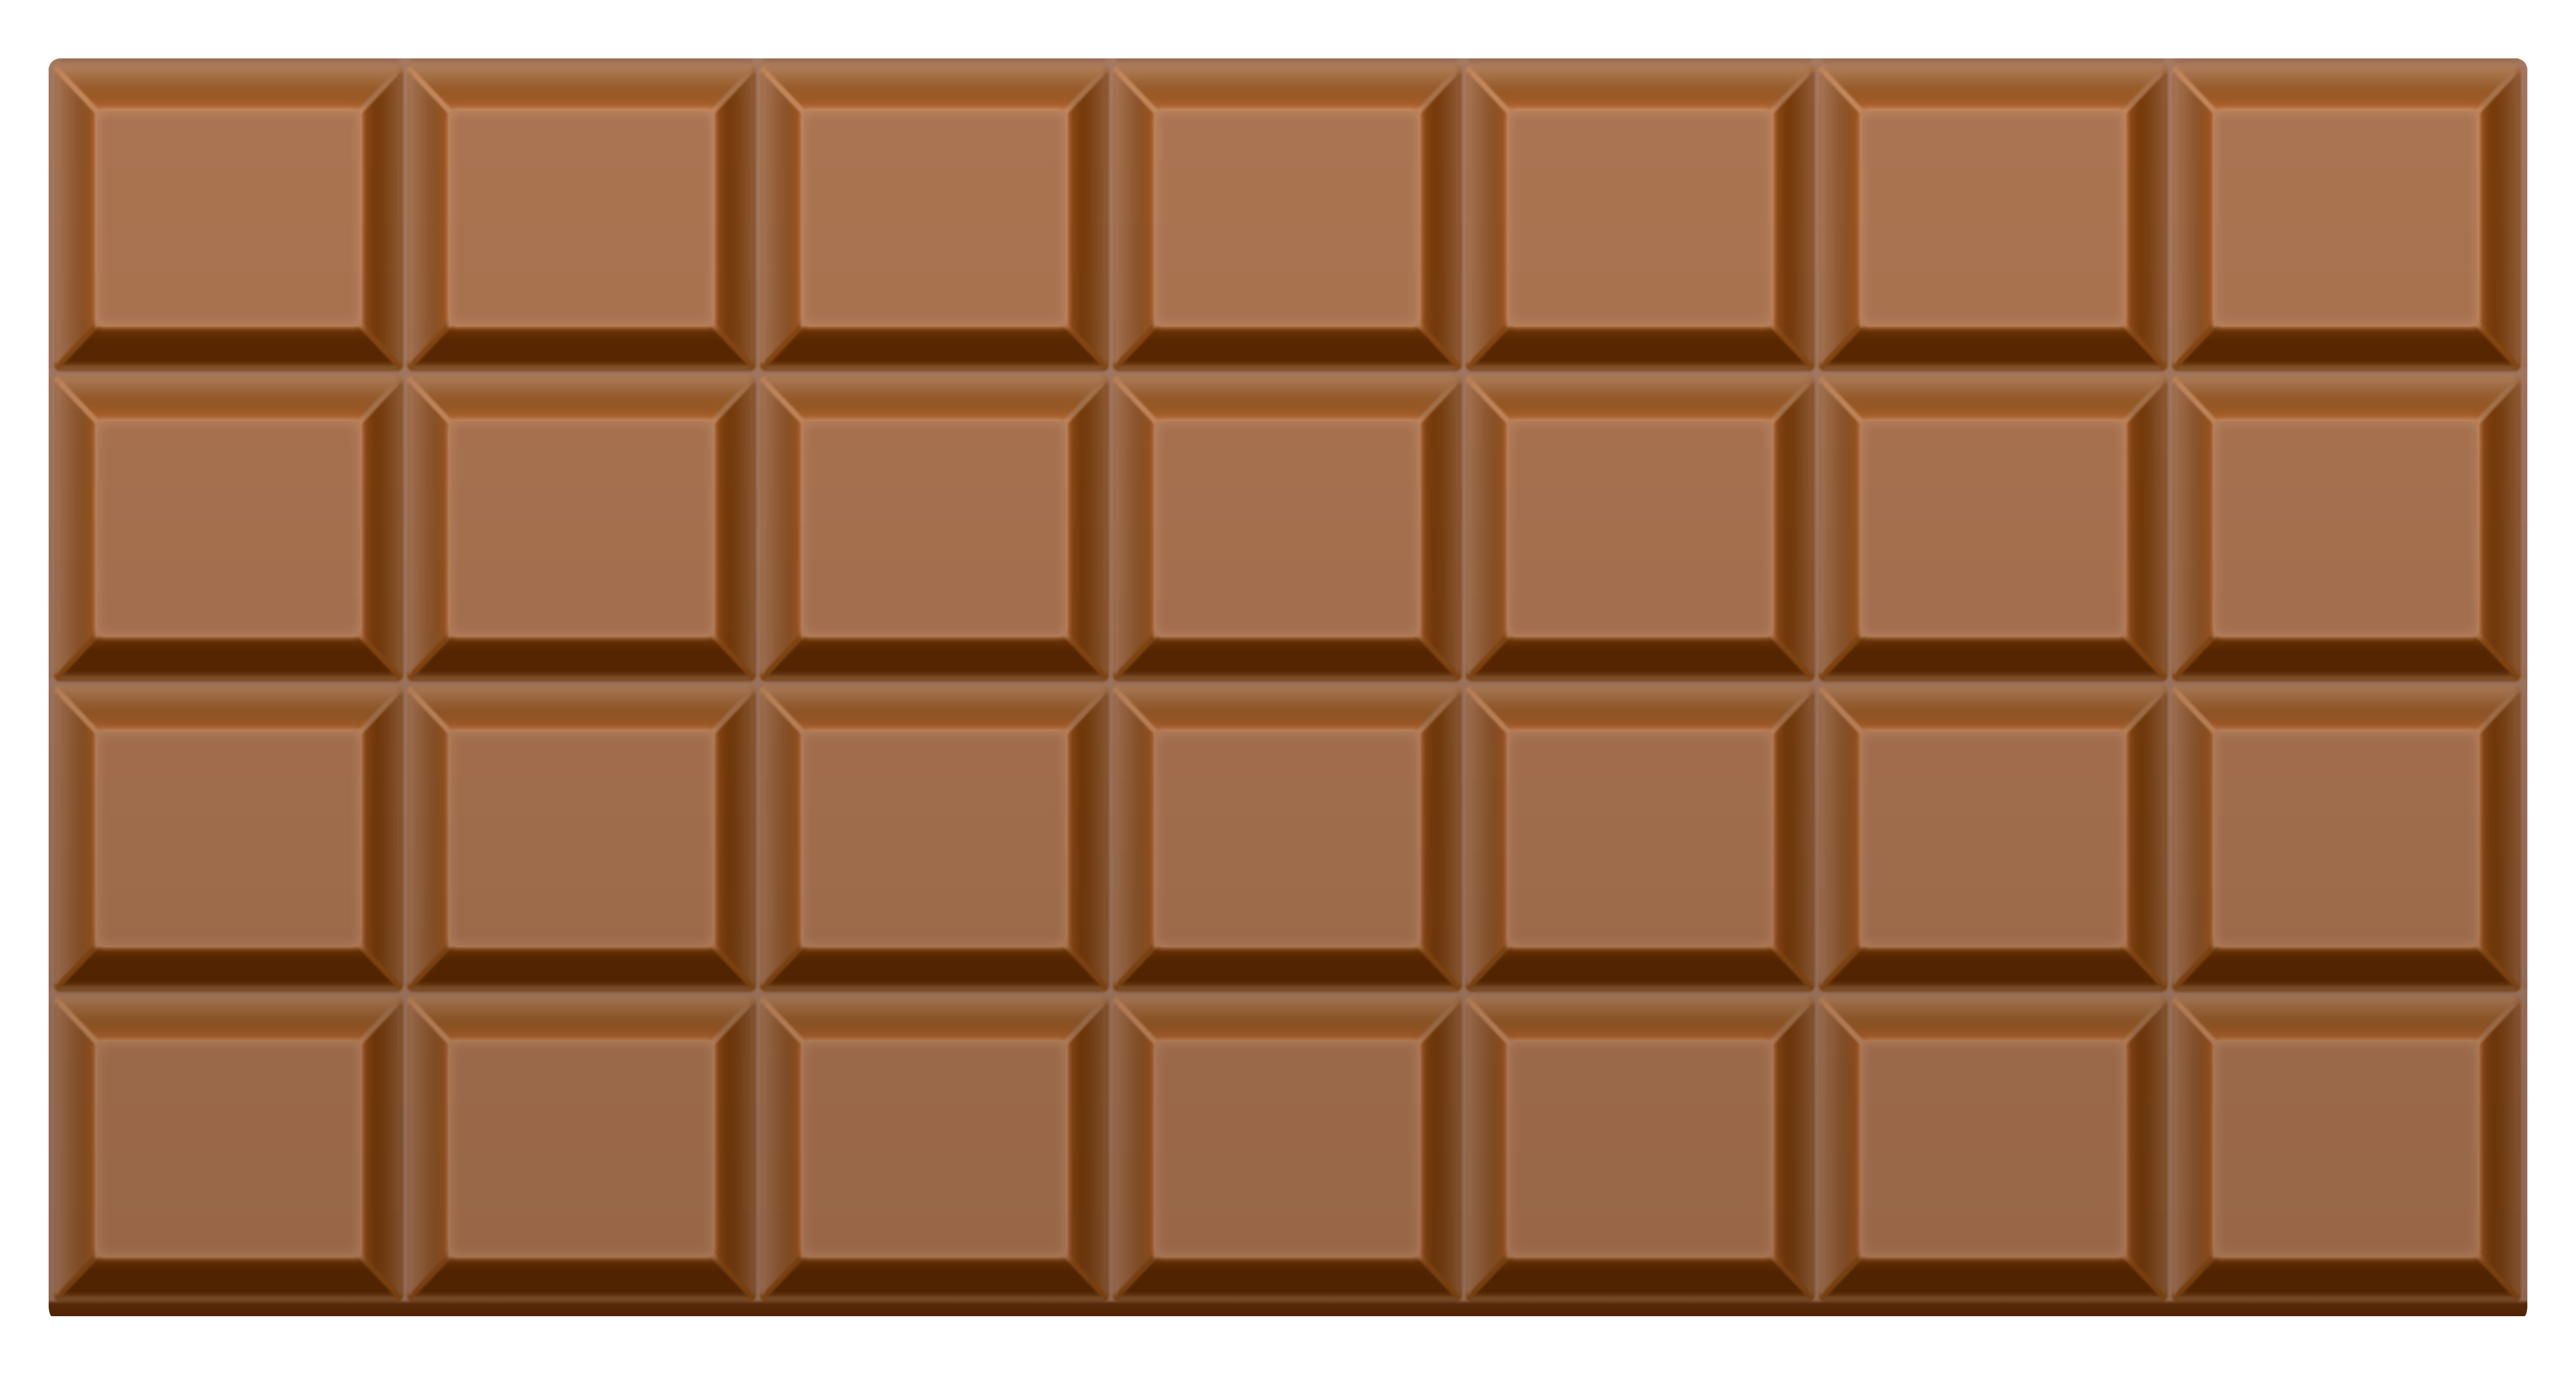 Chocolate candy bar.